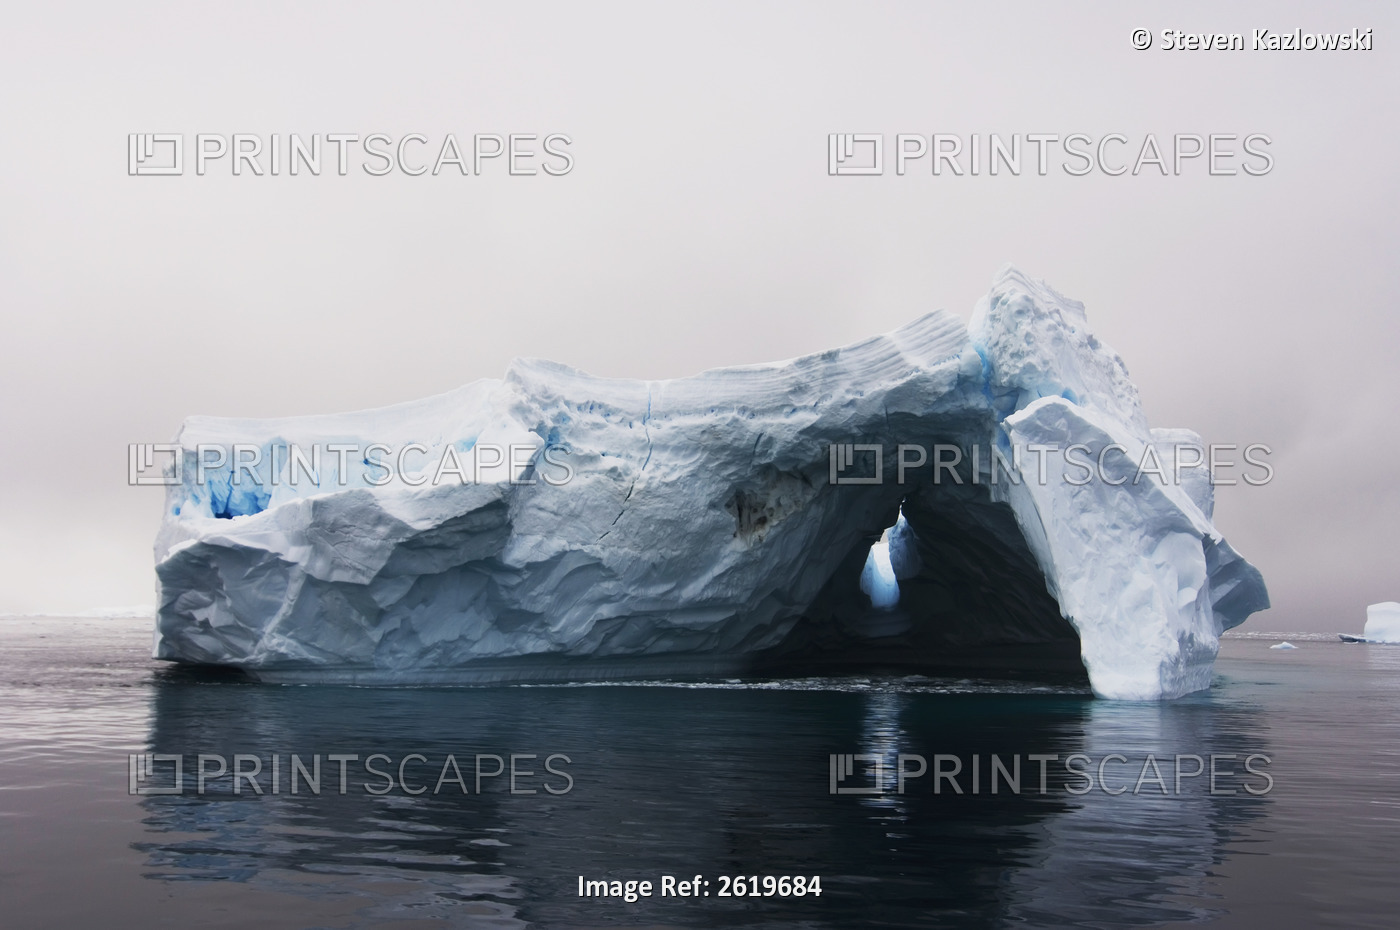 Iceberg Floating Off The Western Antarctic Peninsula, Antarctica, Southern Ocean